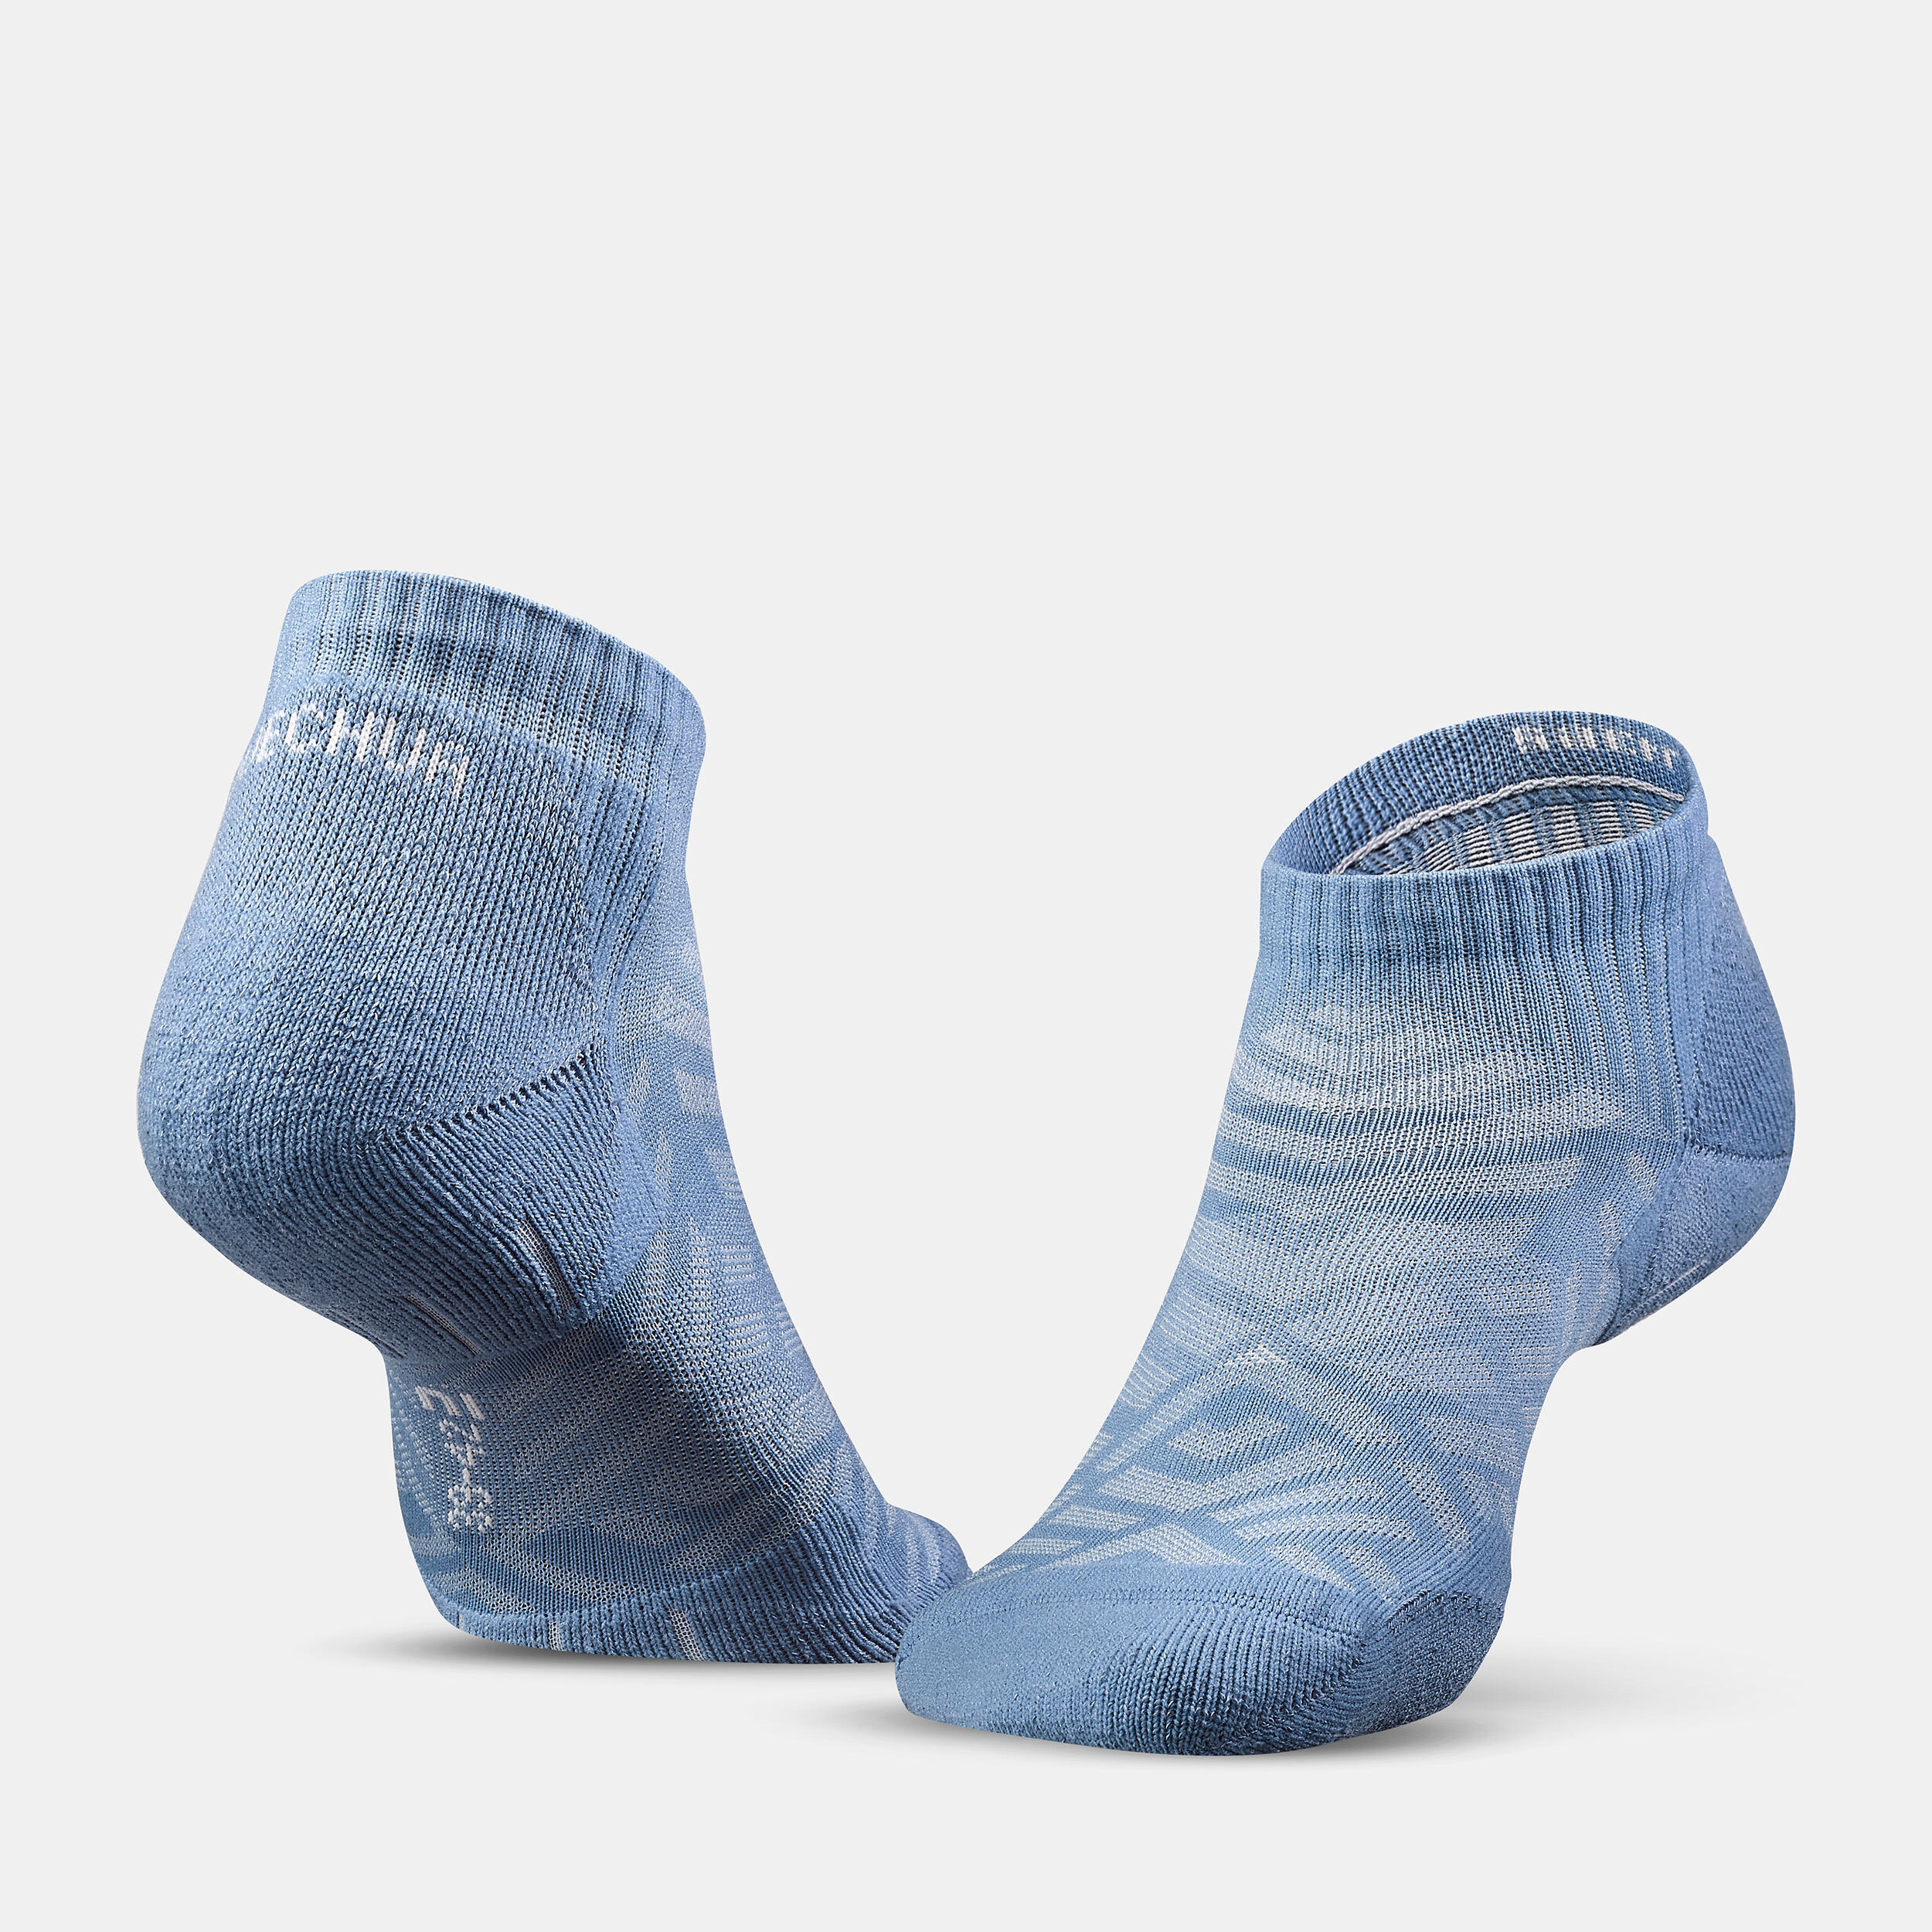 Hike 100 Low Socks  - Light Blue- Pack of 2 pairs 2/5